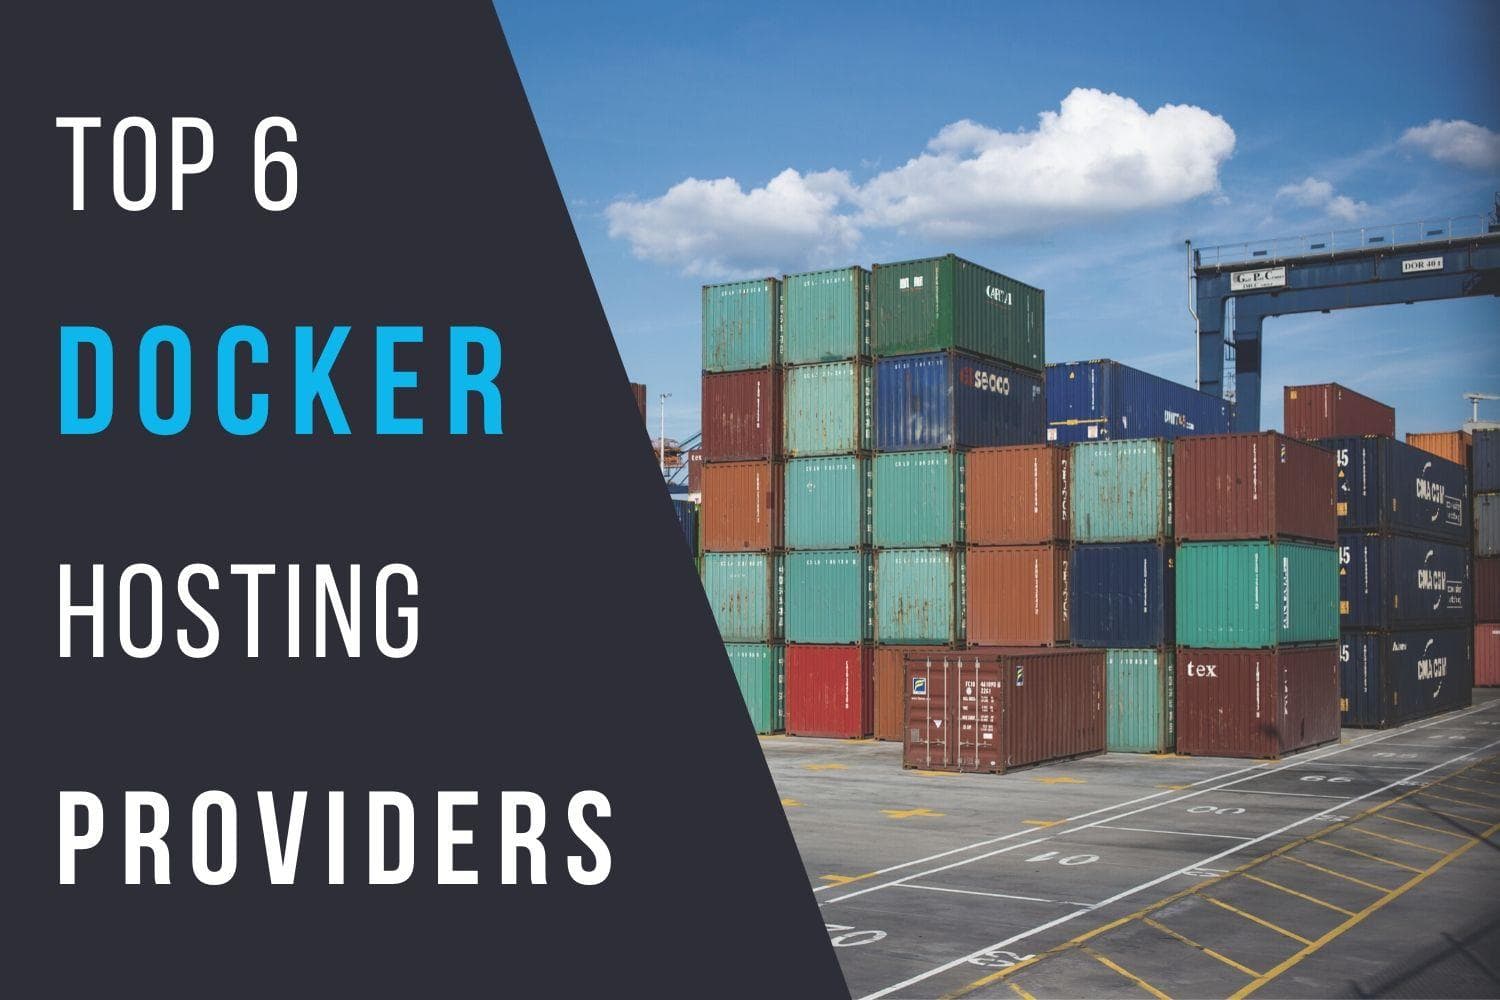 Top 6 Docker Hosting Providers